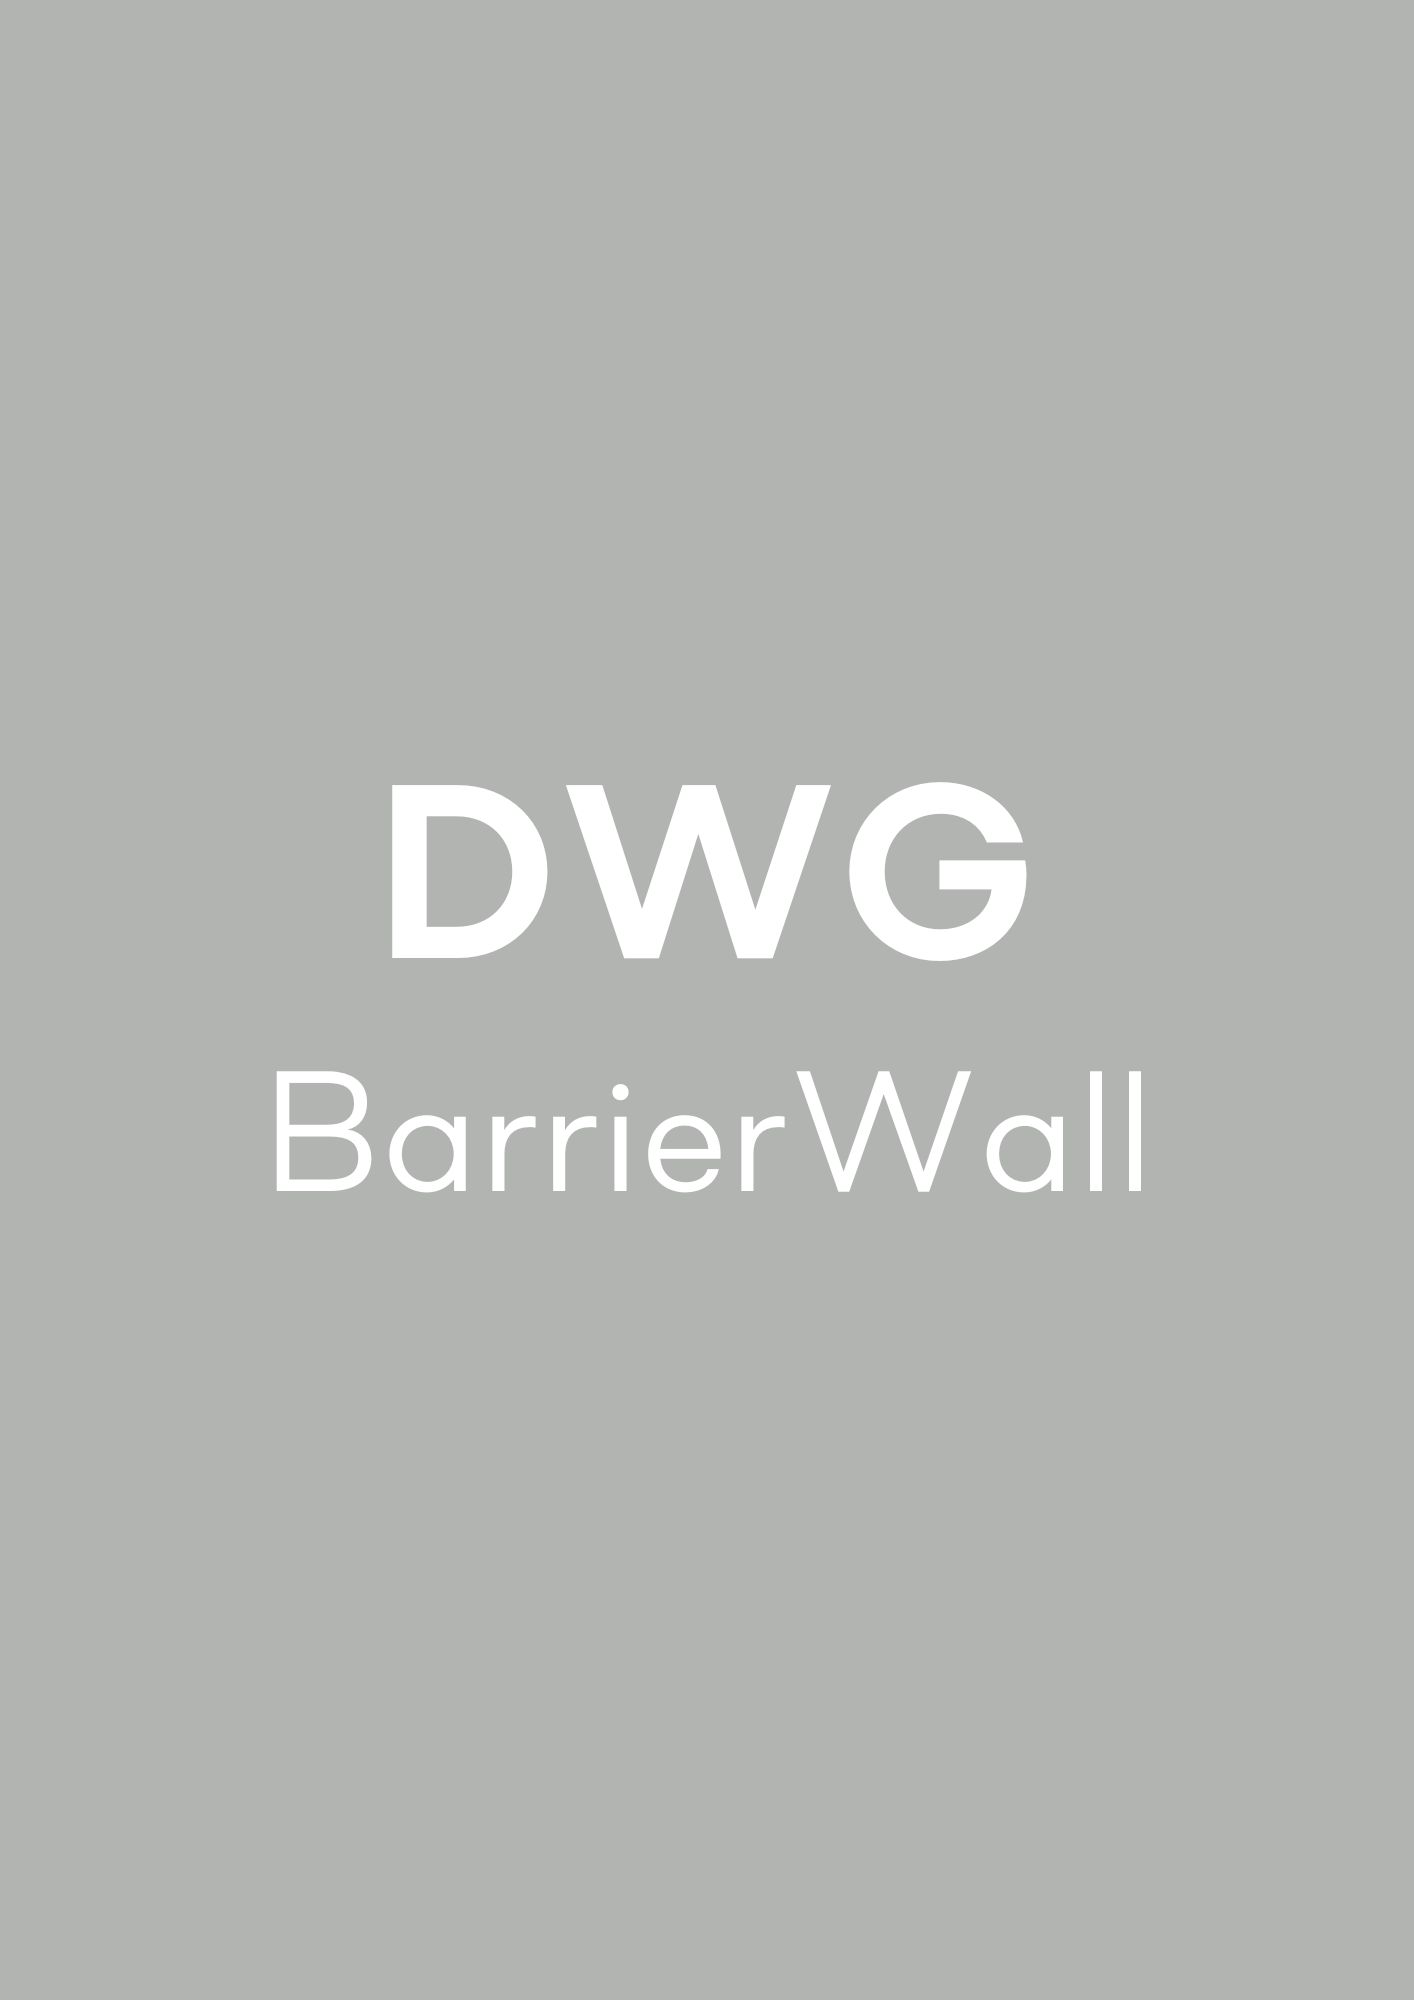 BarrierWall DWG